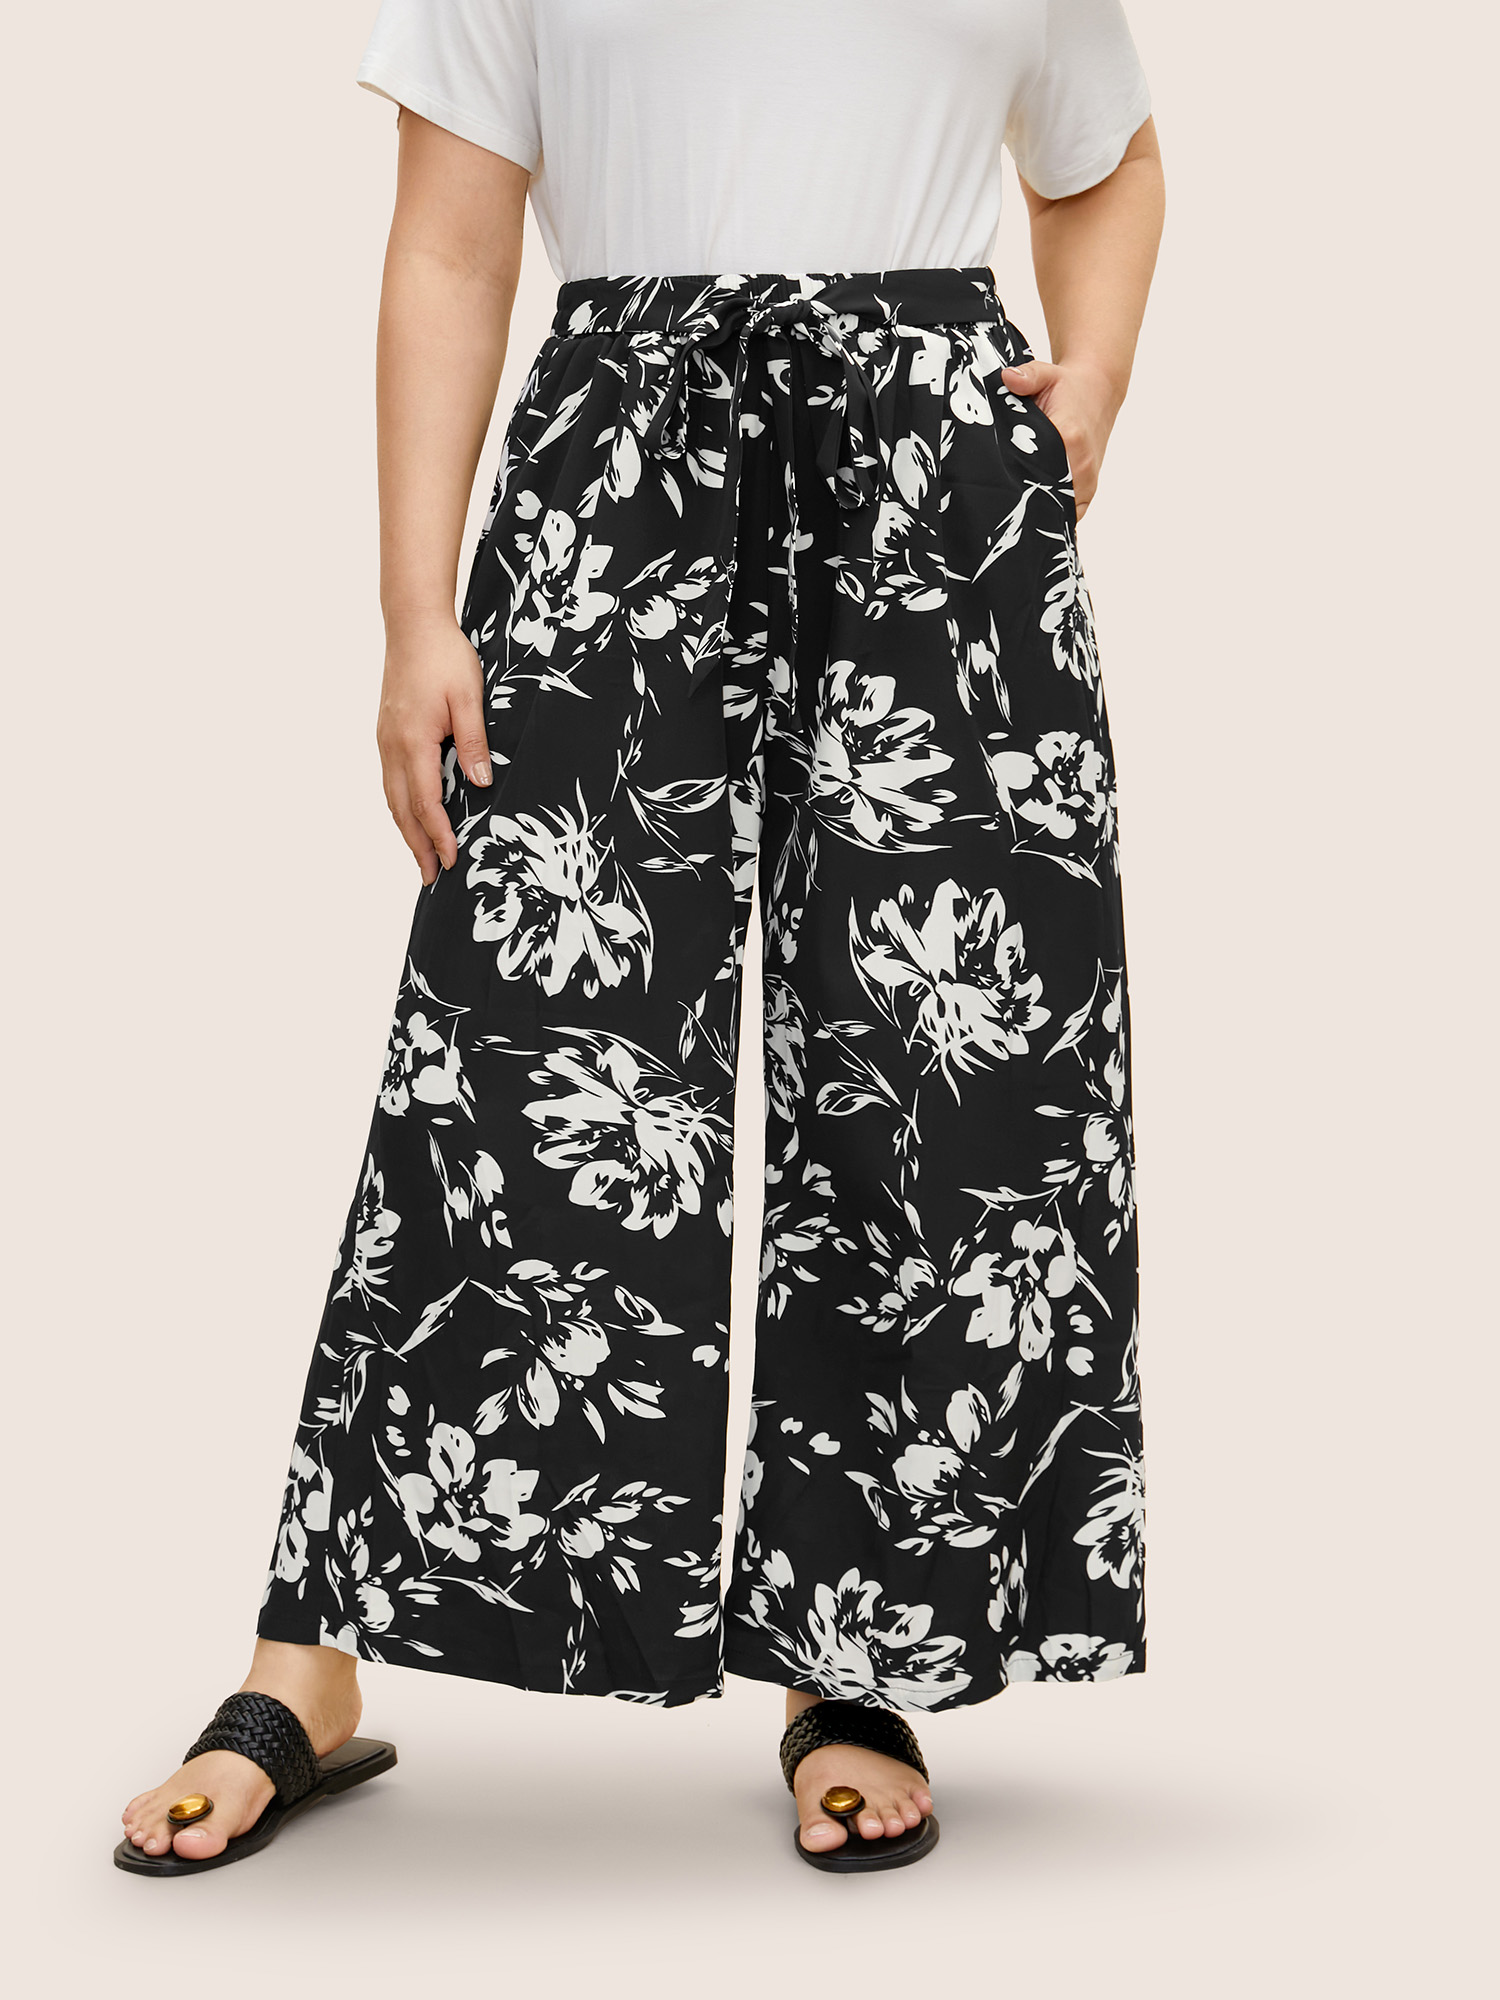 

Plus Size Silhouette Floral Print Tie Knot Wide Leg Pants Women Black Casual Wide Leg Mid Rise Everyday Pants BloomChic